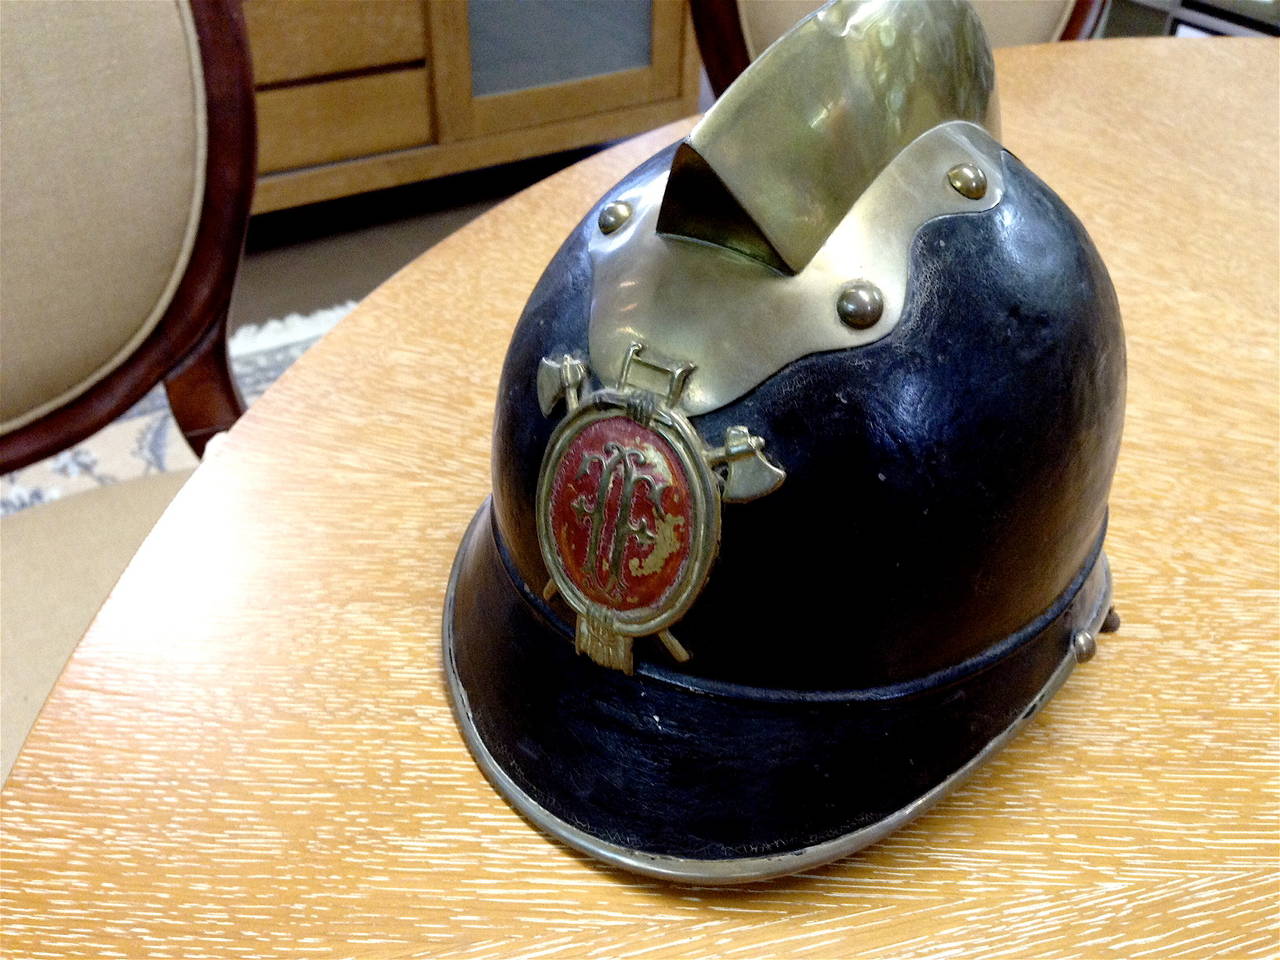 19th century continental fire helmet.